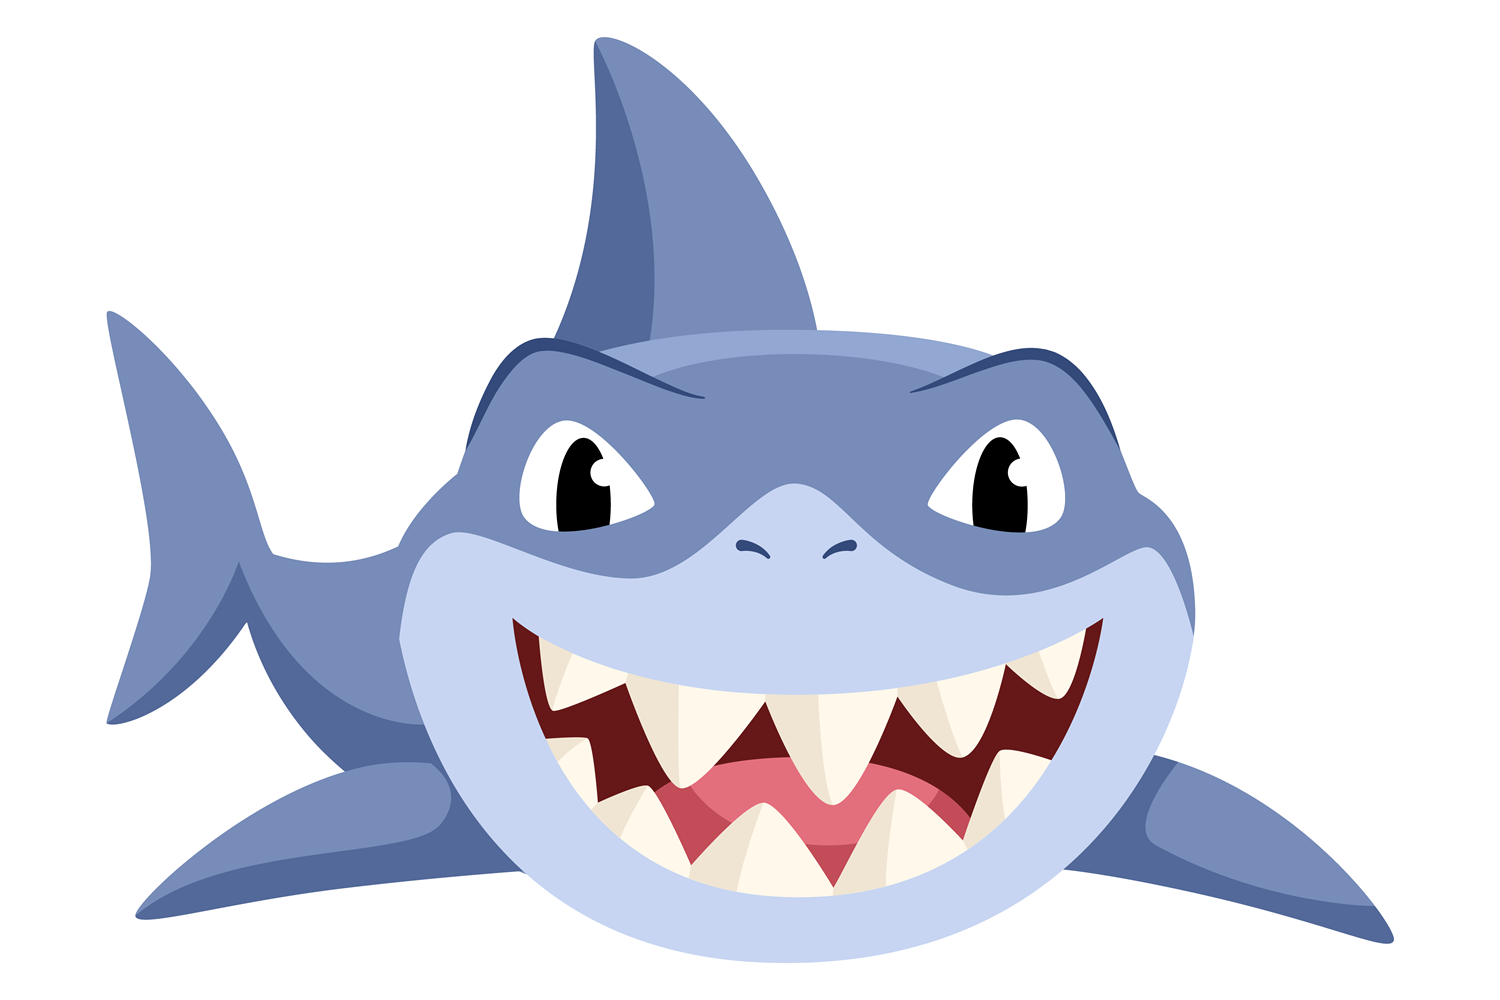 Shark Character with Teeth. Cartoon Anim Graphic by ladadikart ...